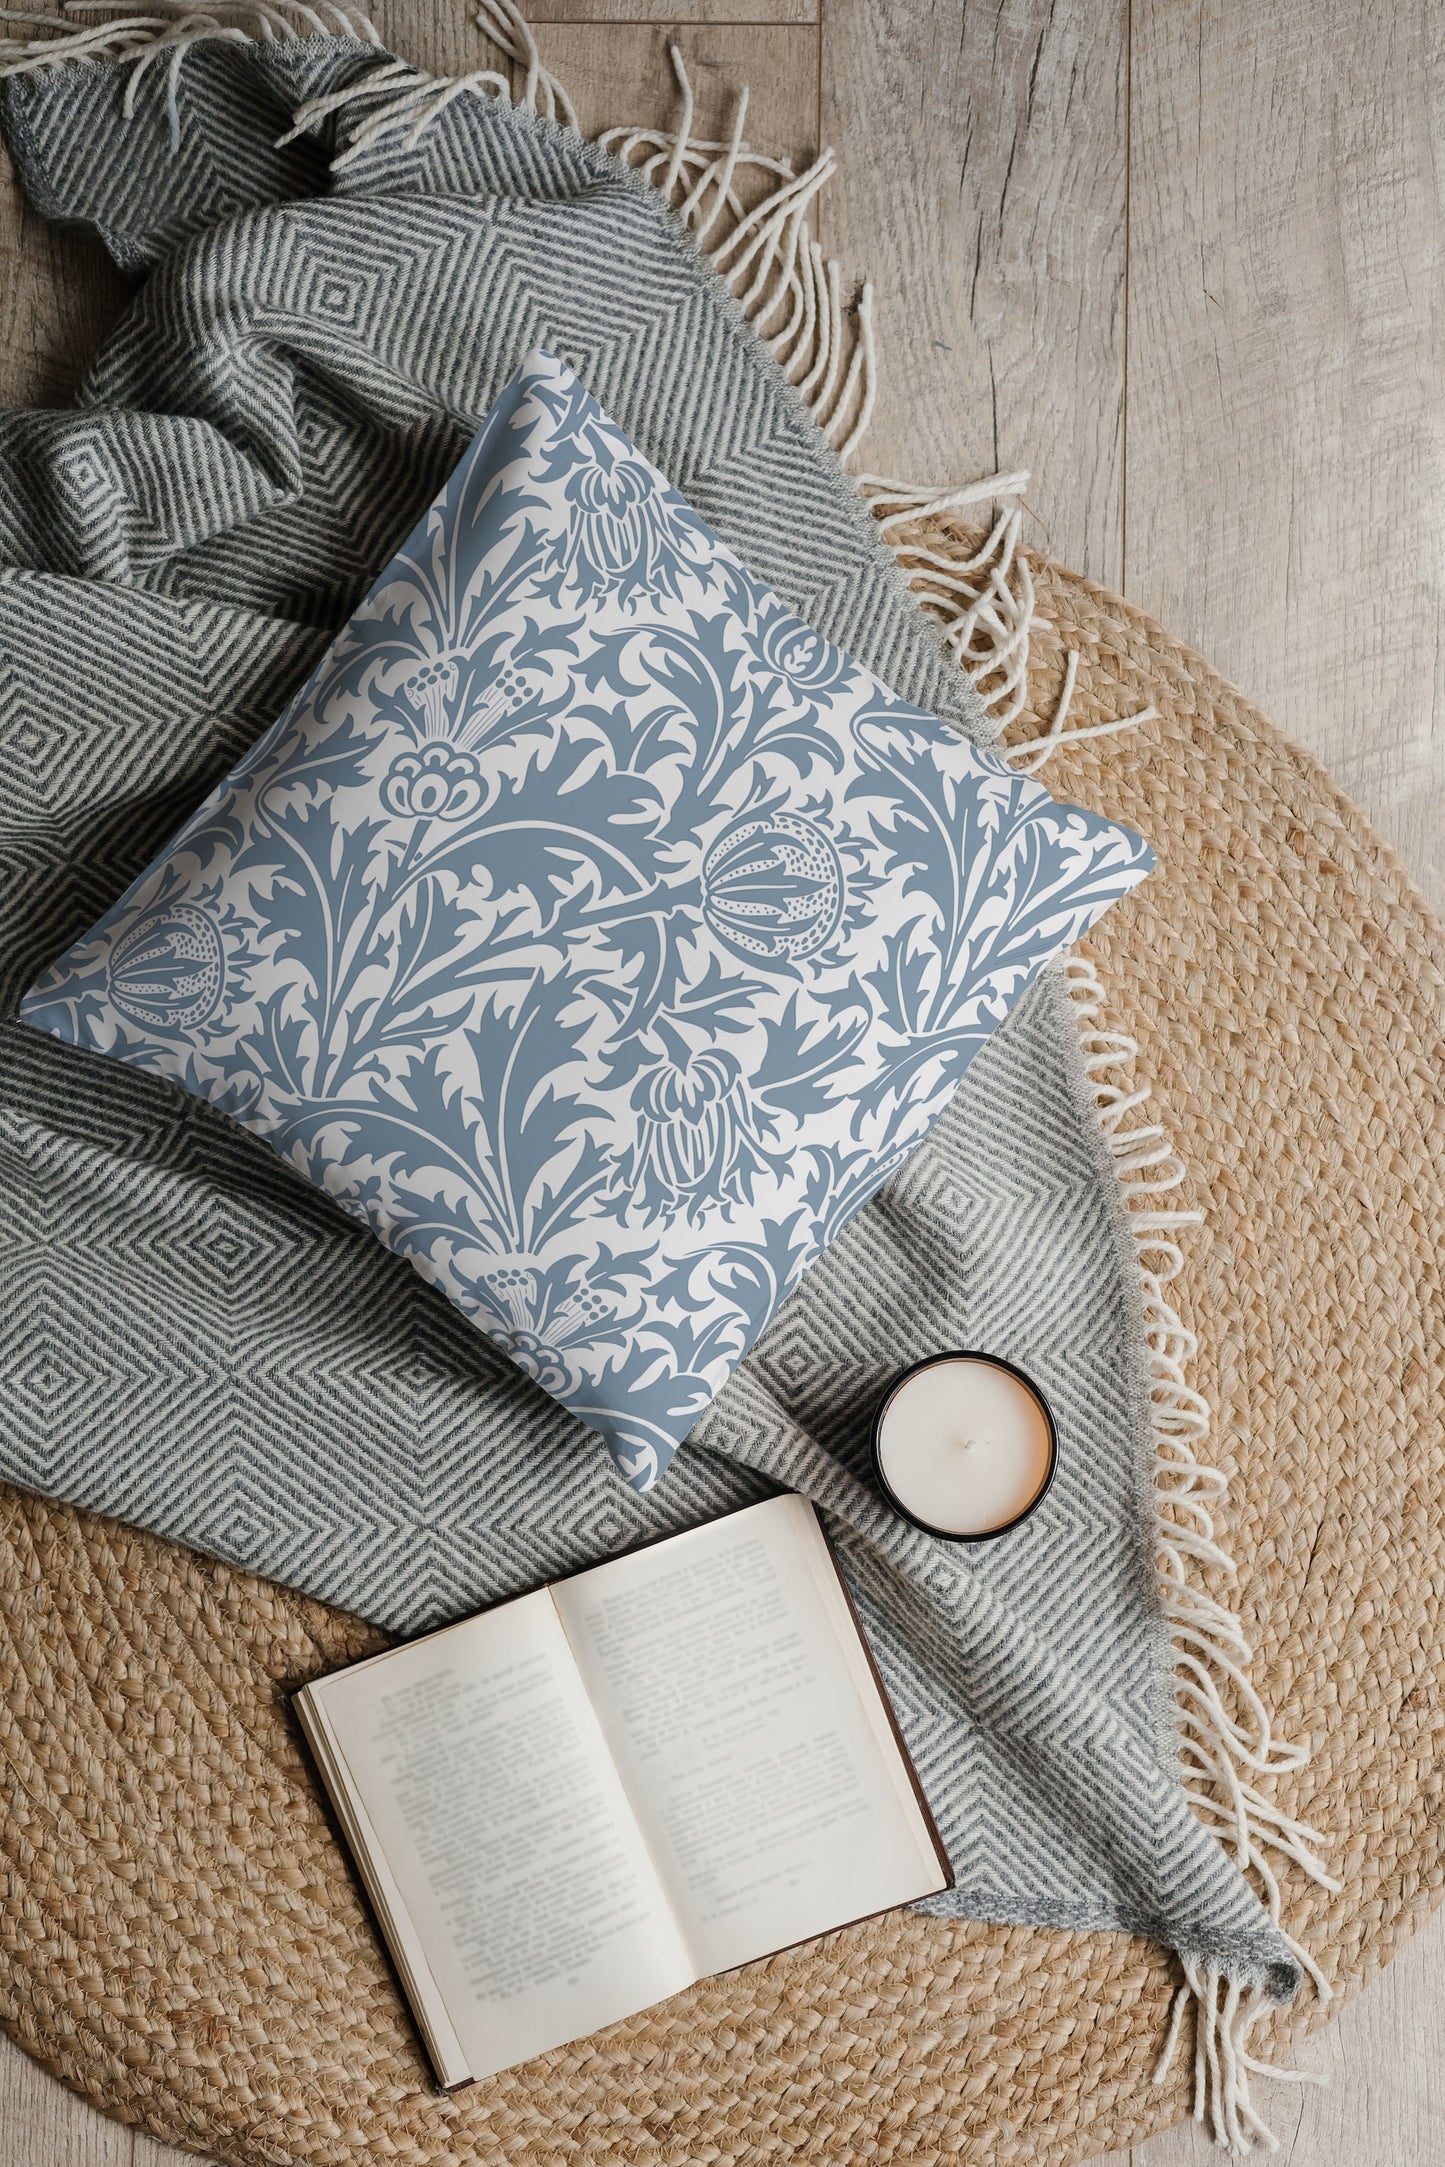 Skye Outdoor Pillows William Morris Thistle Blue Cream